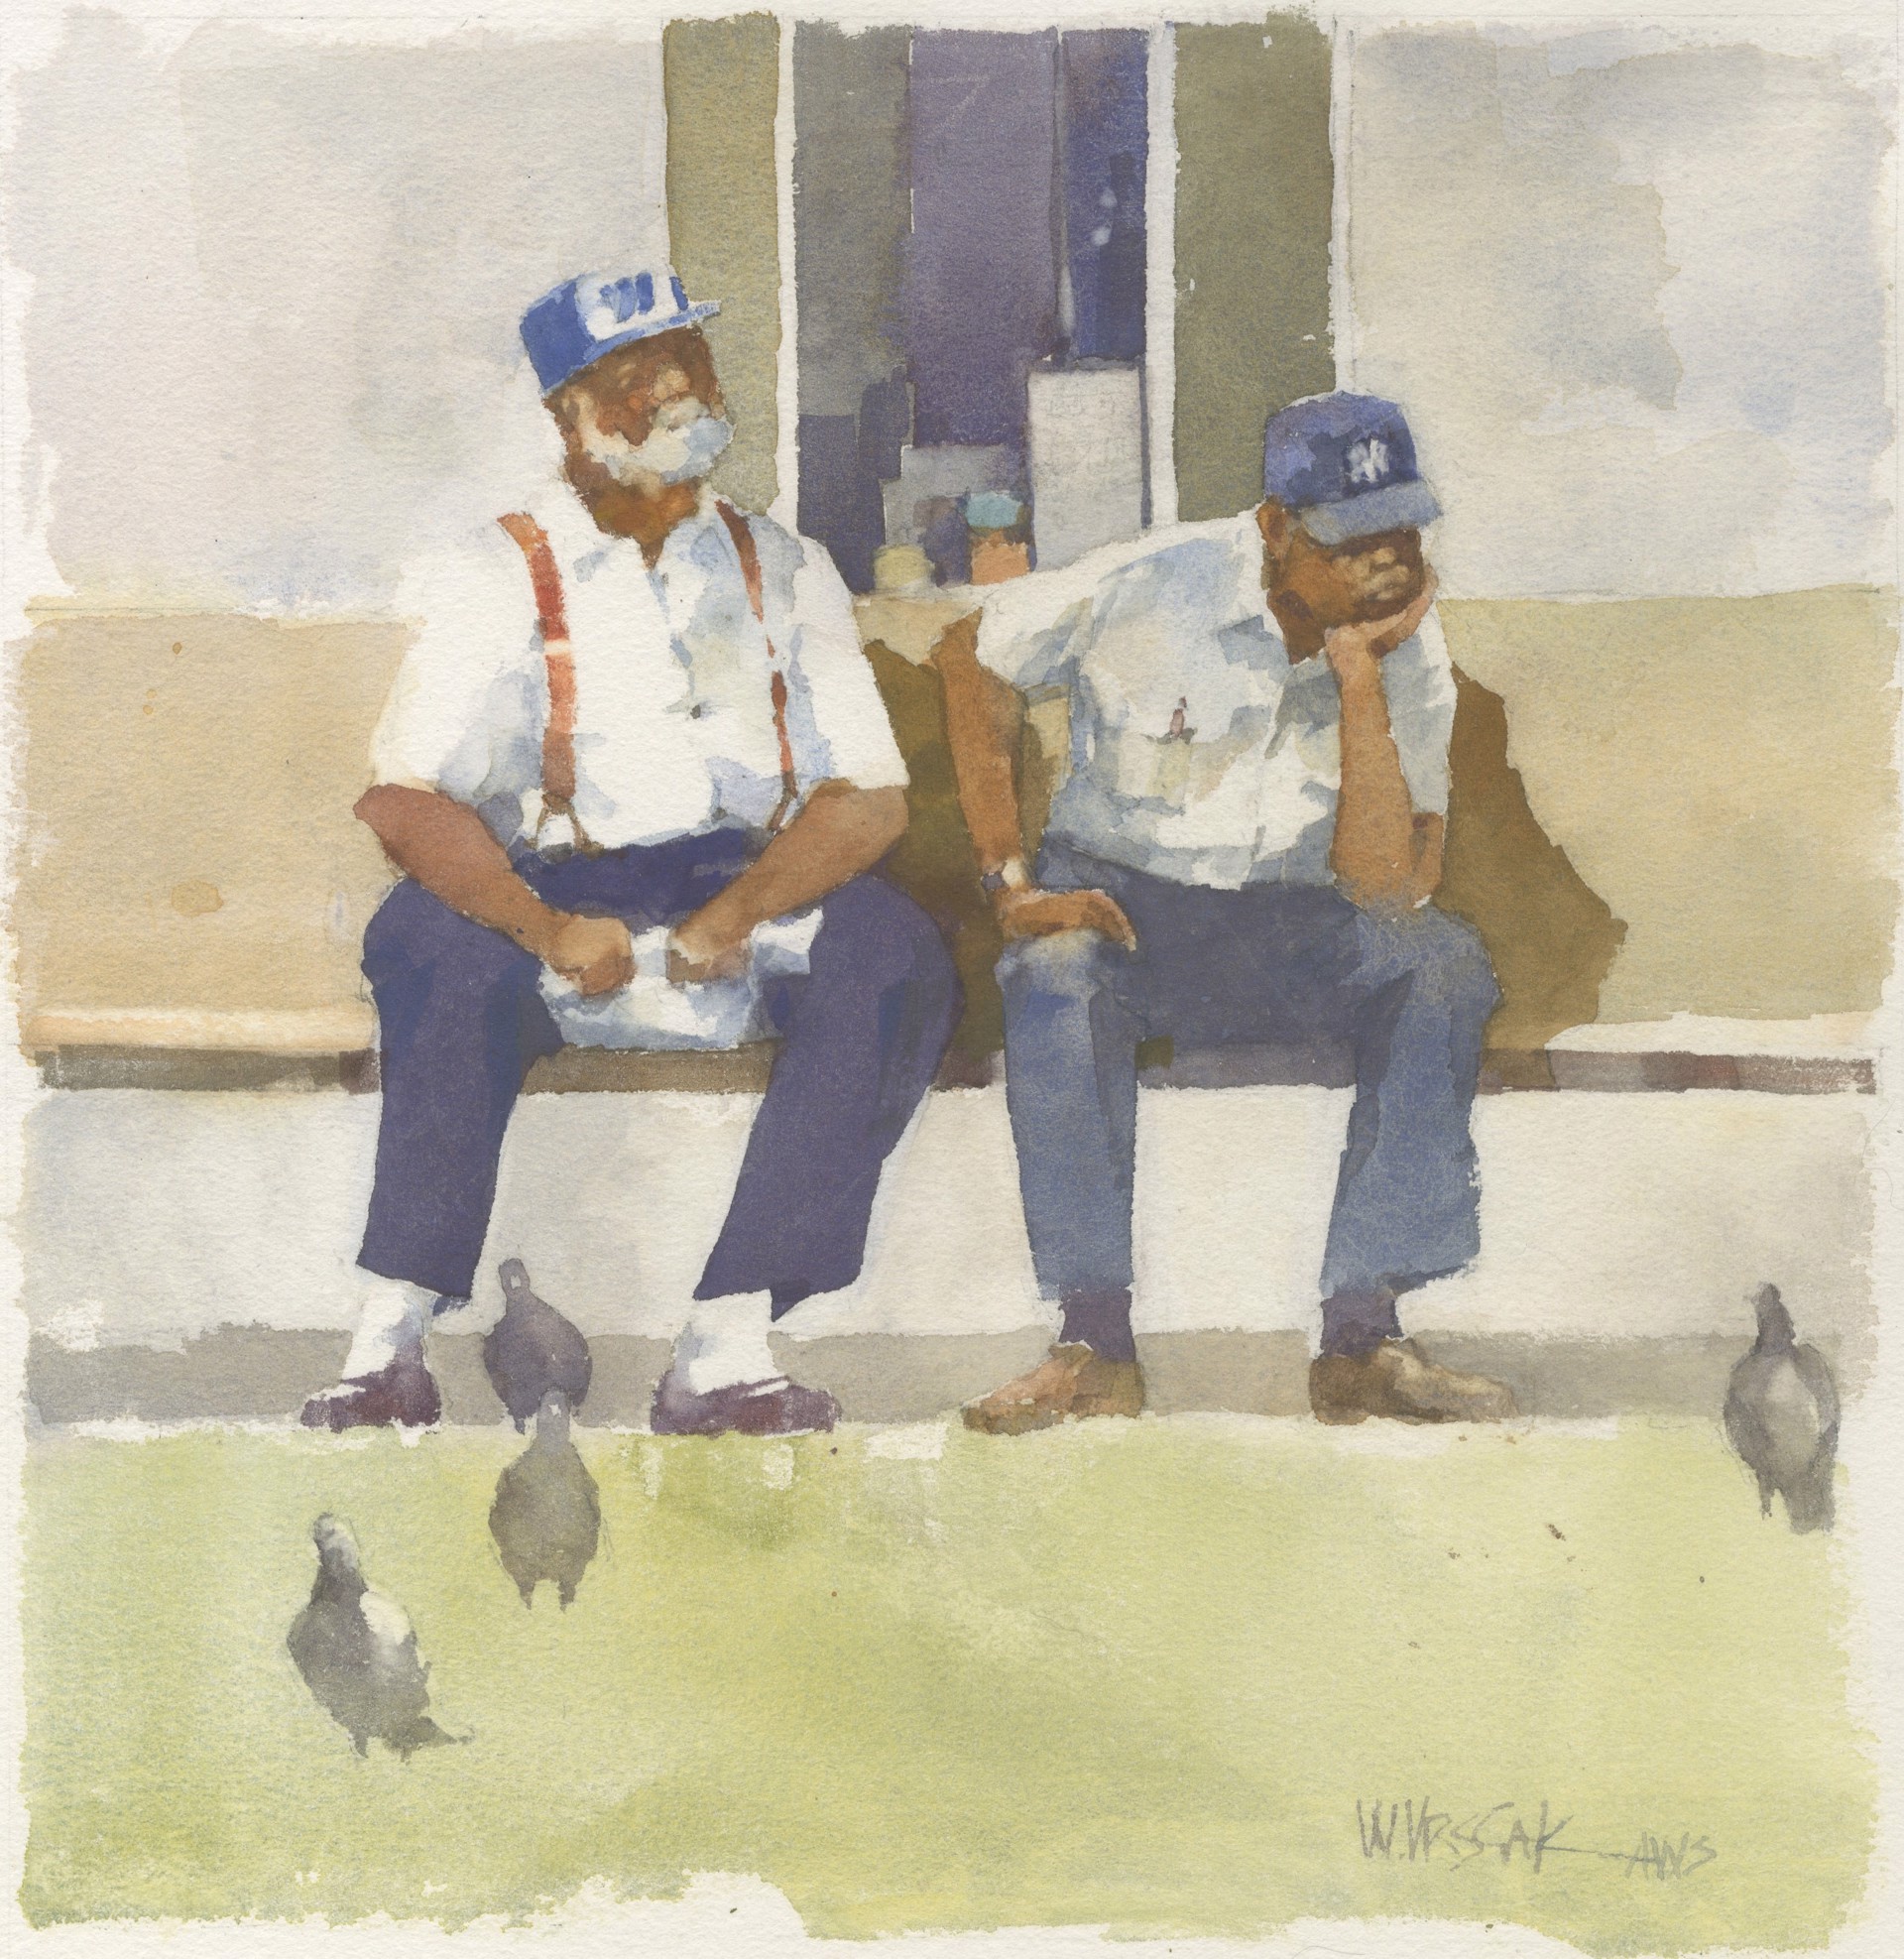 Market Square Regulars - Contemplating A Pigeon by William Vrscak